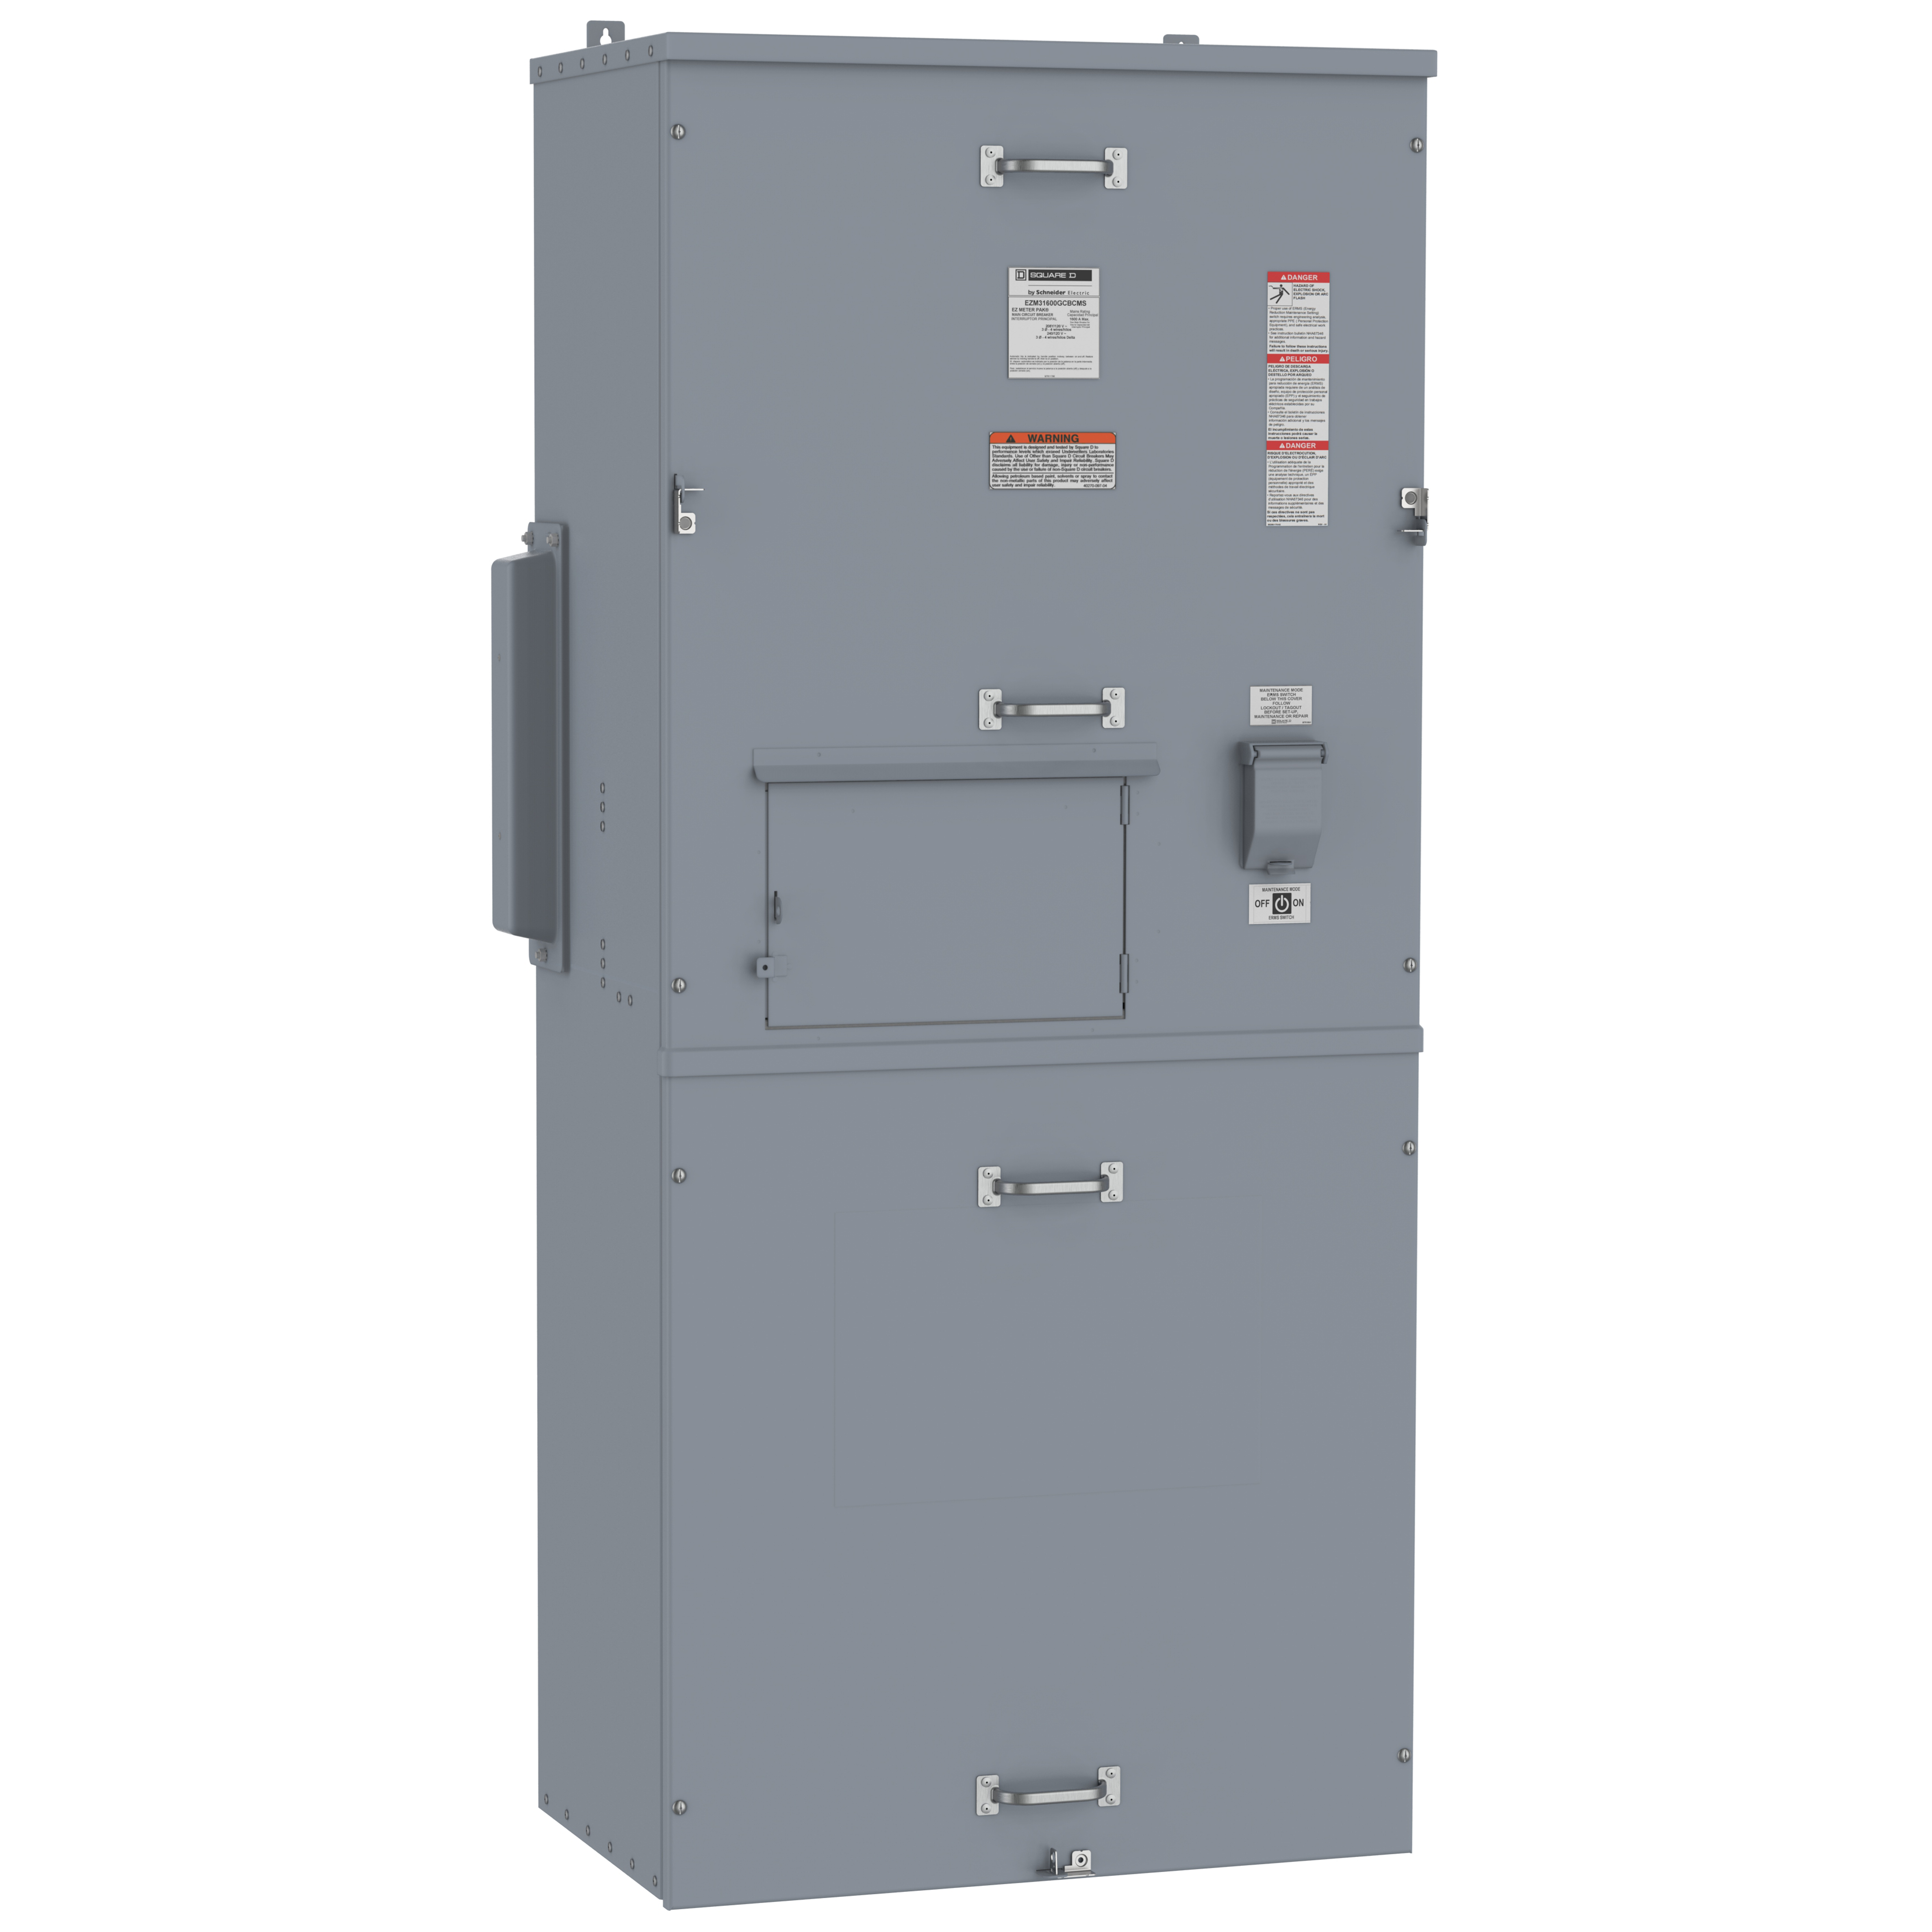 Main unit, EZ Meter-Pak, 1600A, 208Y/120VAC, 3 phase, 4 wire, 65kA SCCR main breaker with energy reduction maintenance